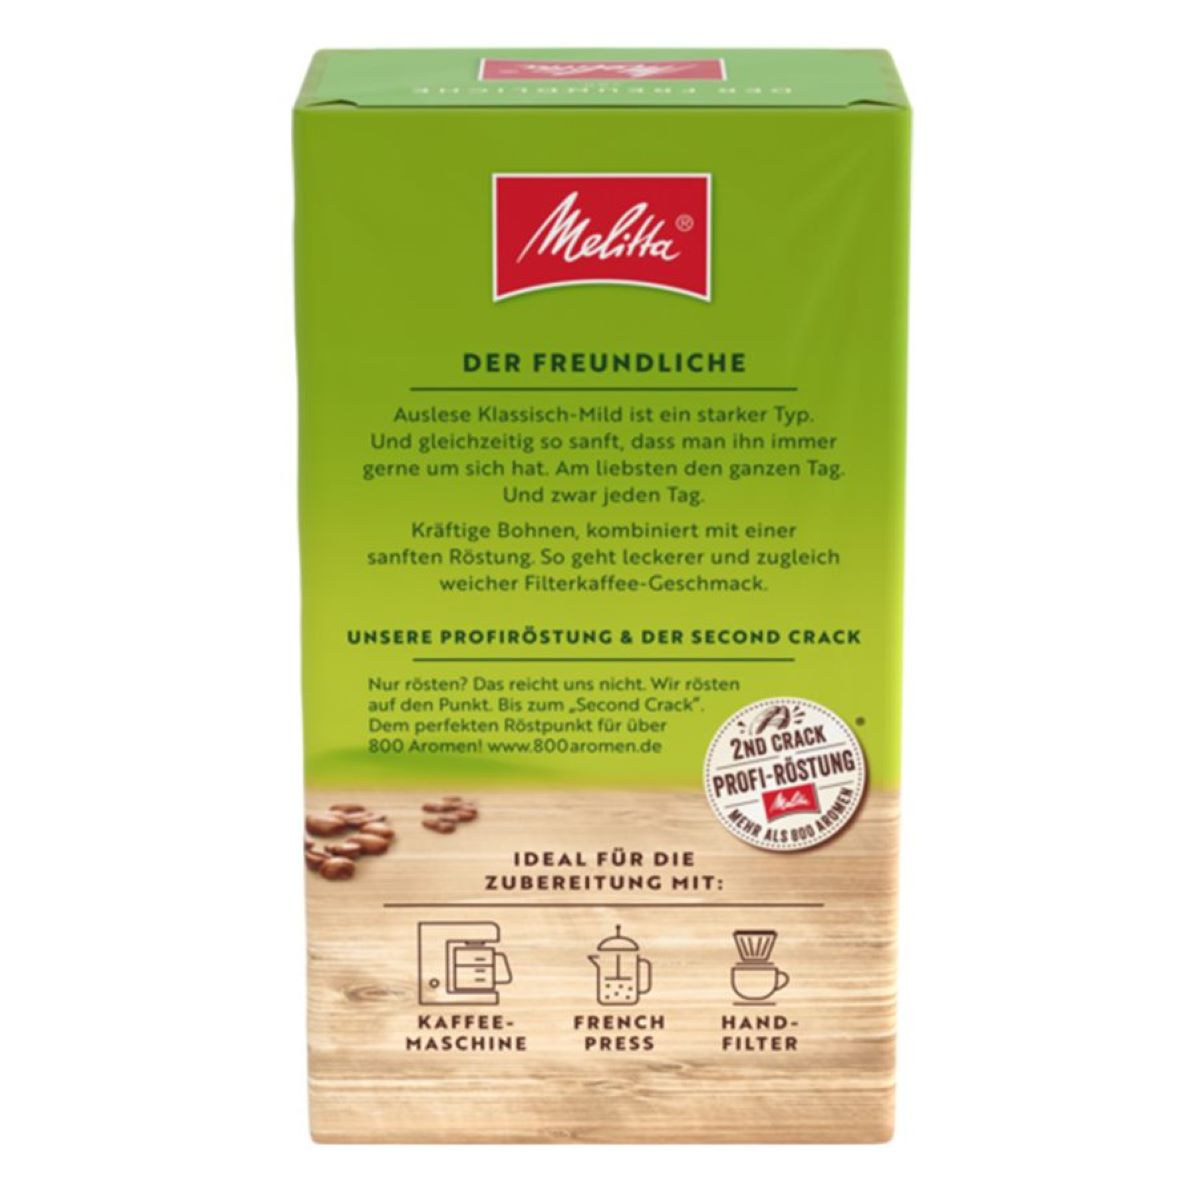 MELITTA Auslese Klassisch-mild Röstkaffee g 500 gemahlener